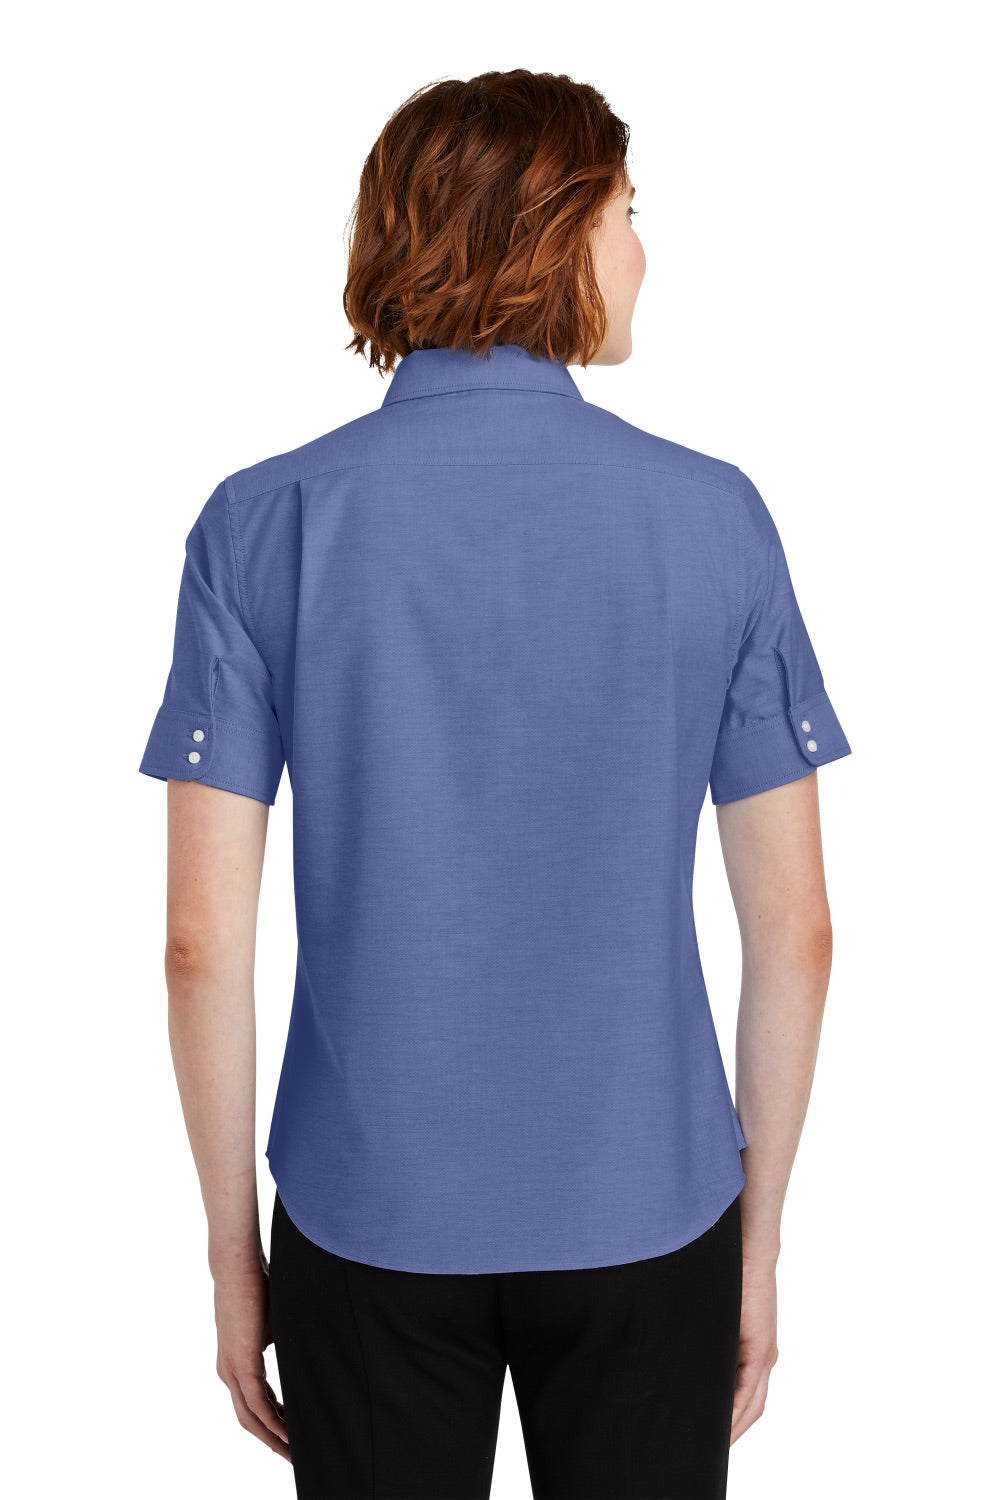 Port Authority L659 Womens SuperPro Oxford Wrinkle Resistant Short Sleeve Button Down Shirt w/ Pocket Navy Blue Back